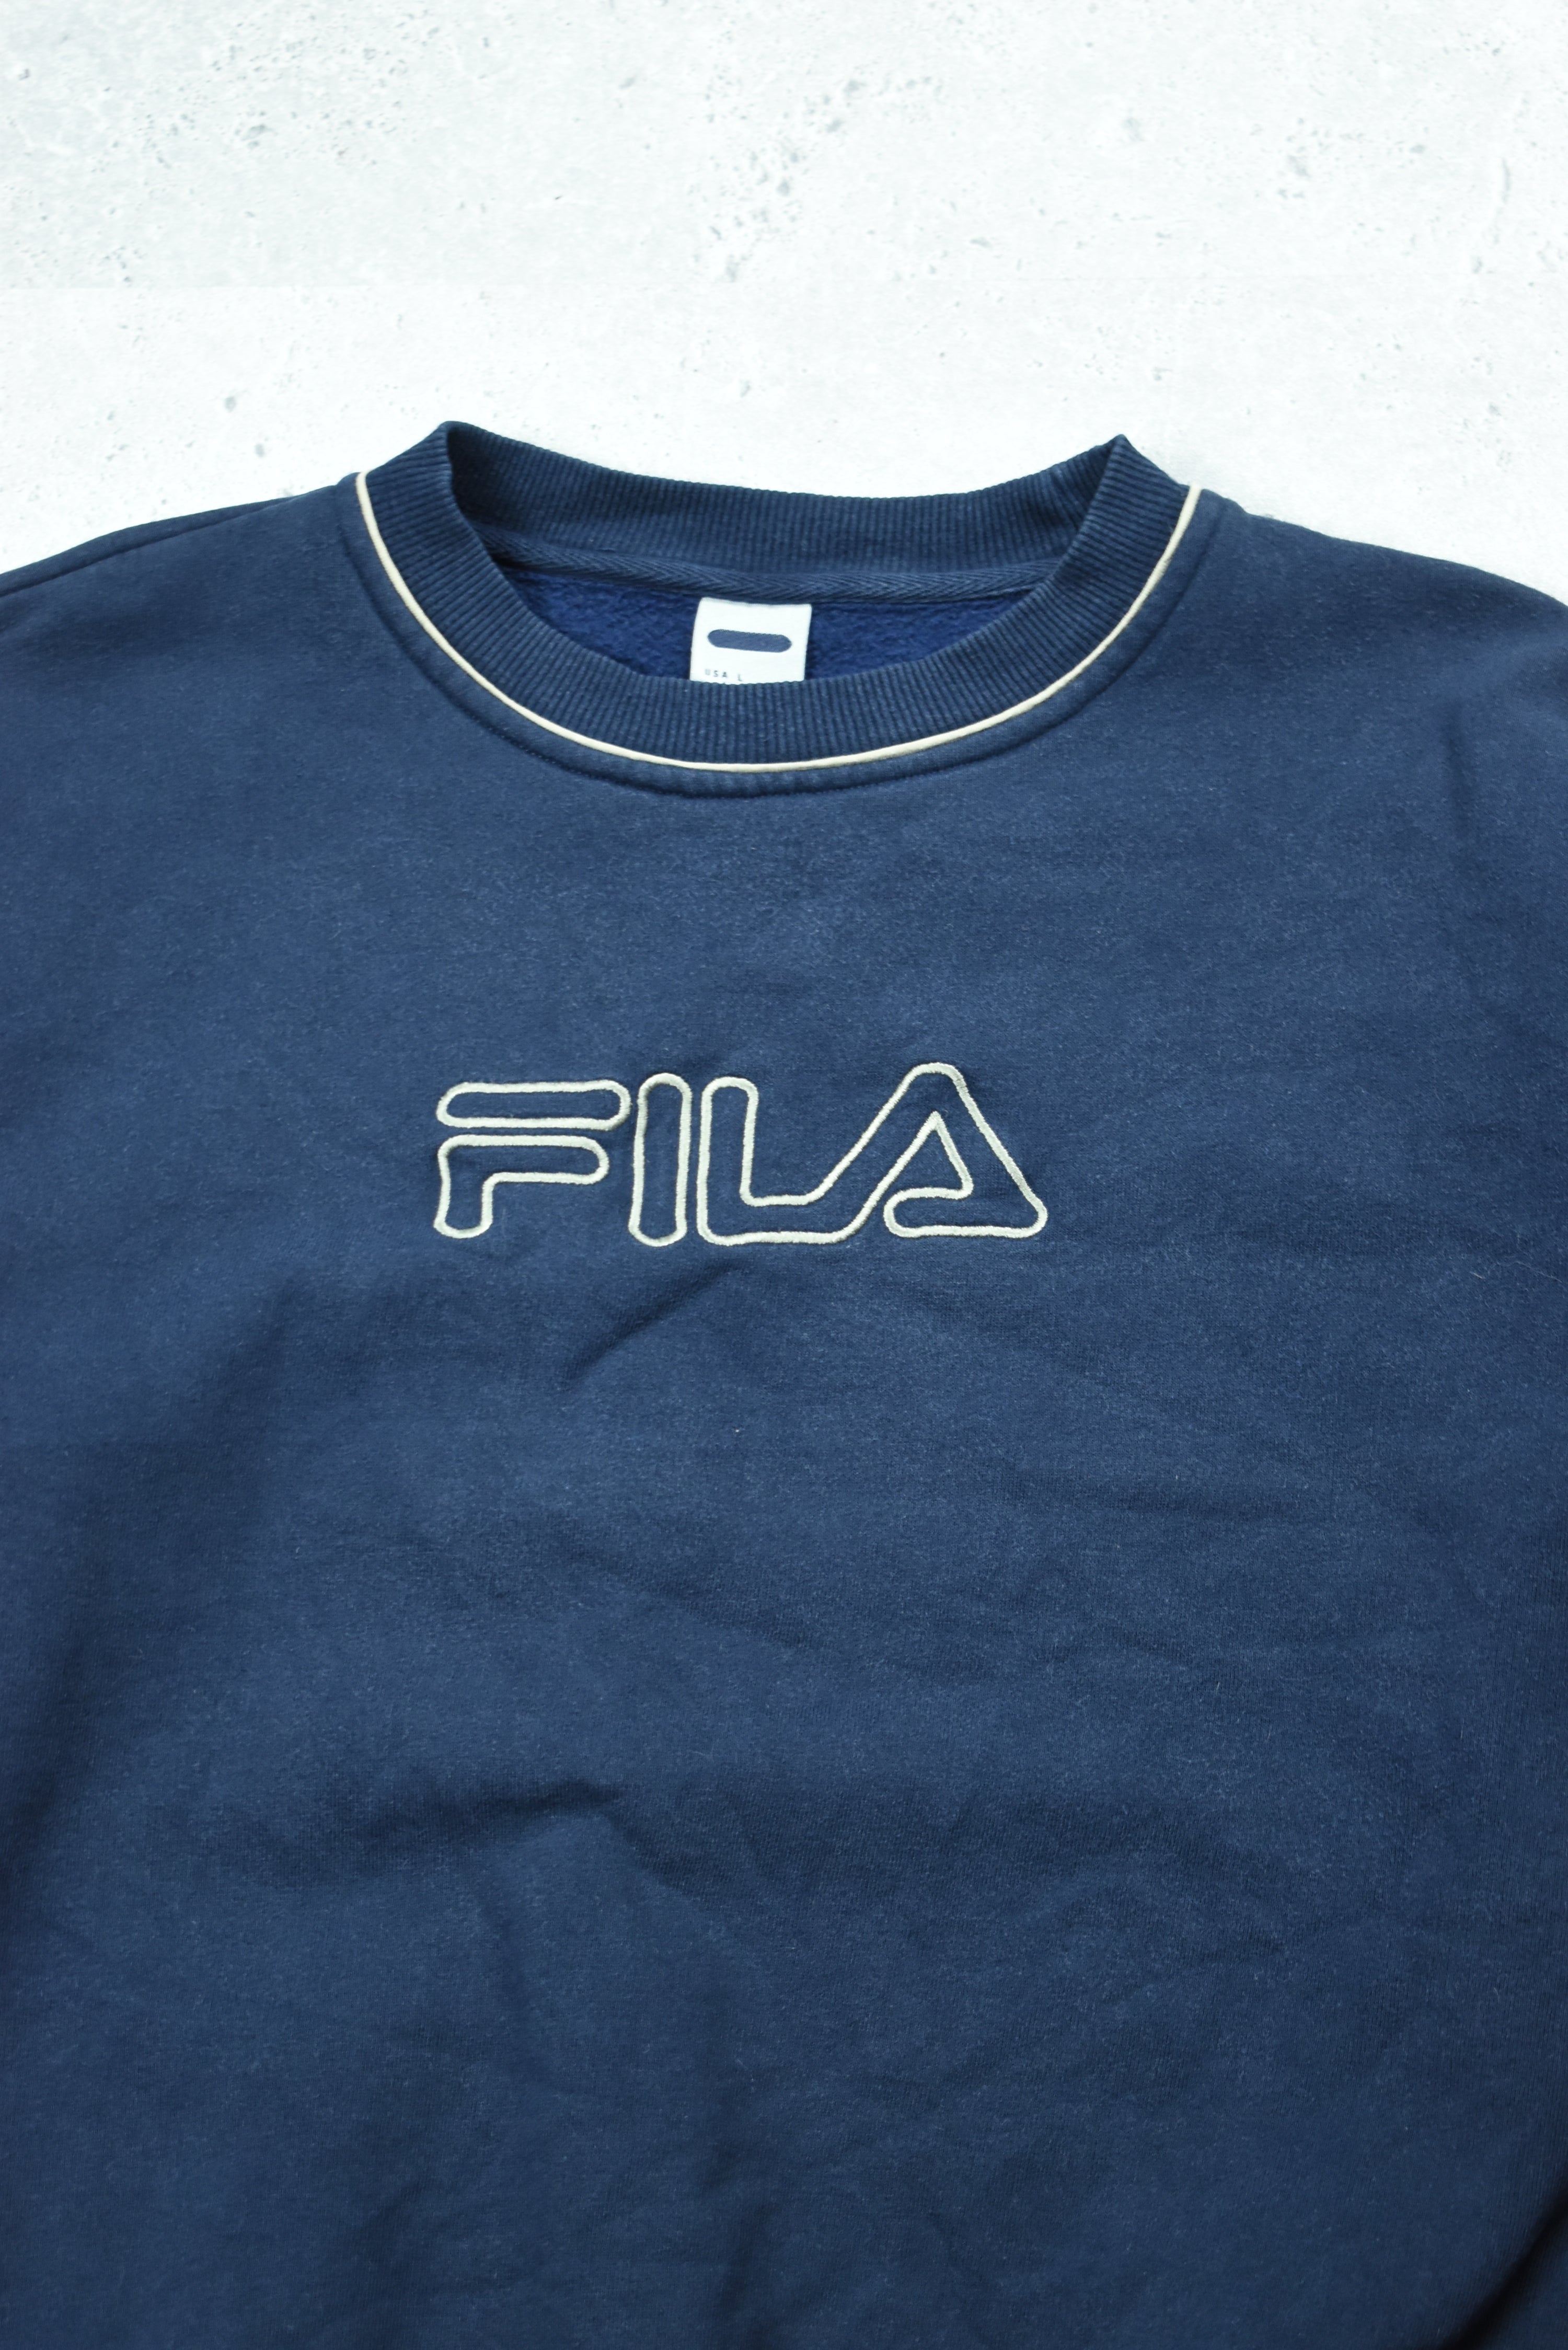 Vintage Fila Embroidery Logo Sweatshirt Large